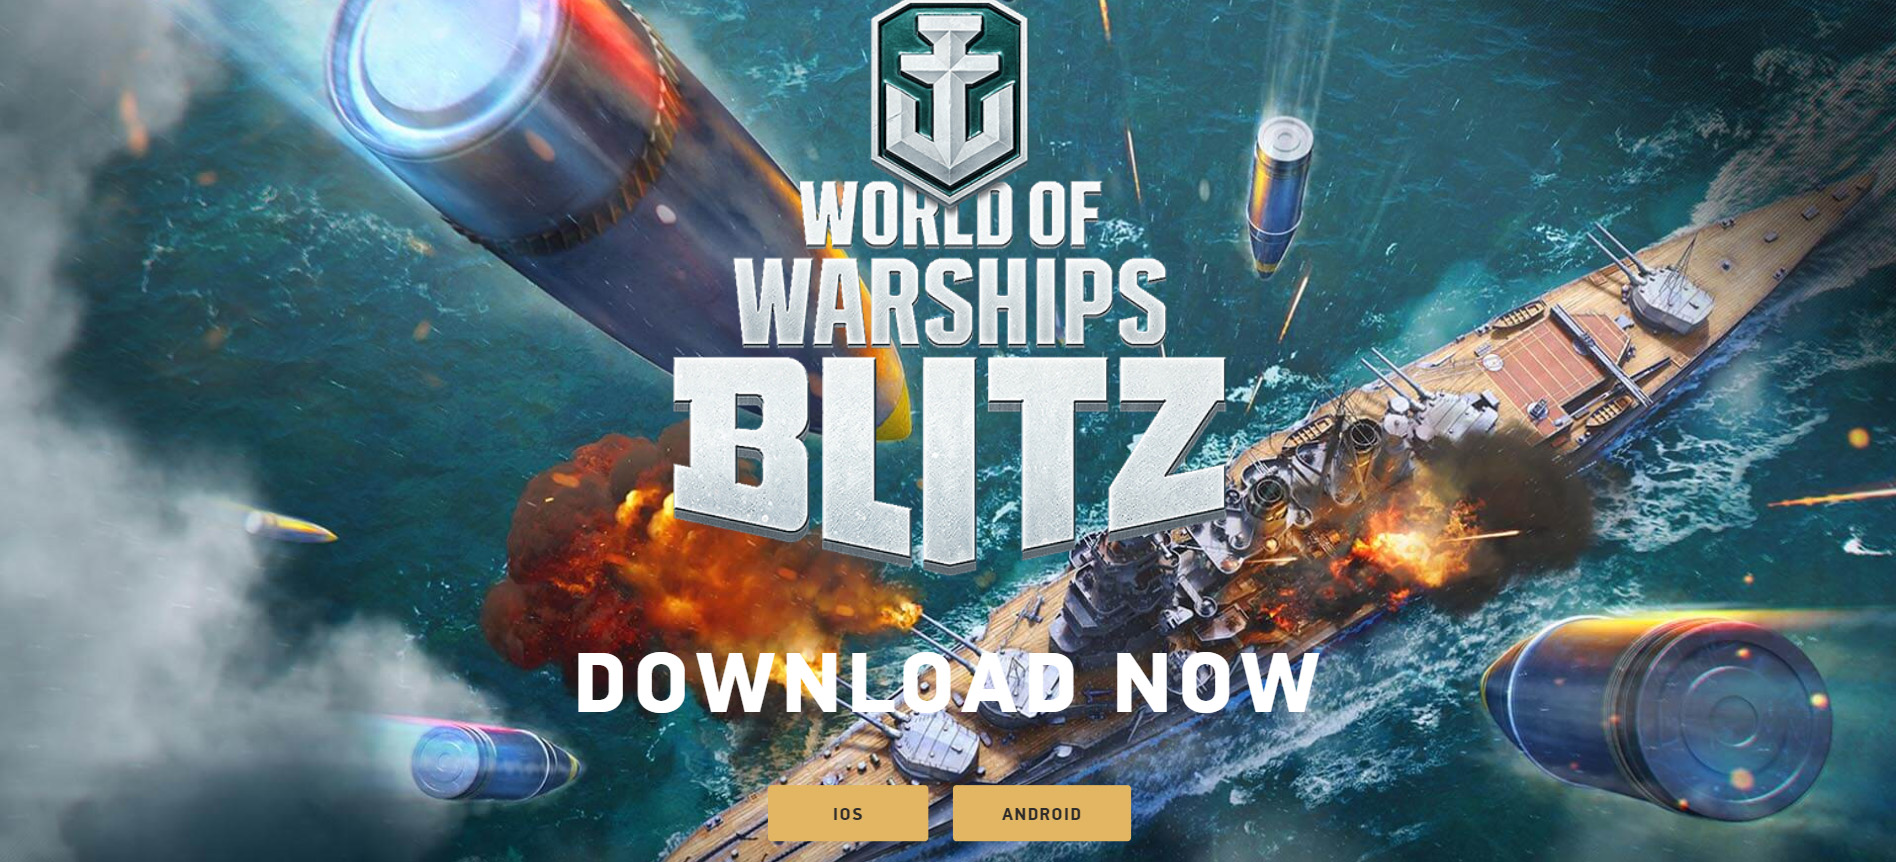 world of warships blitz down